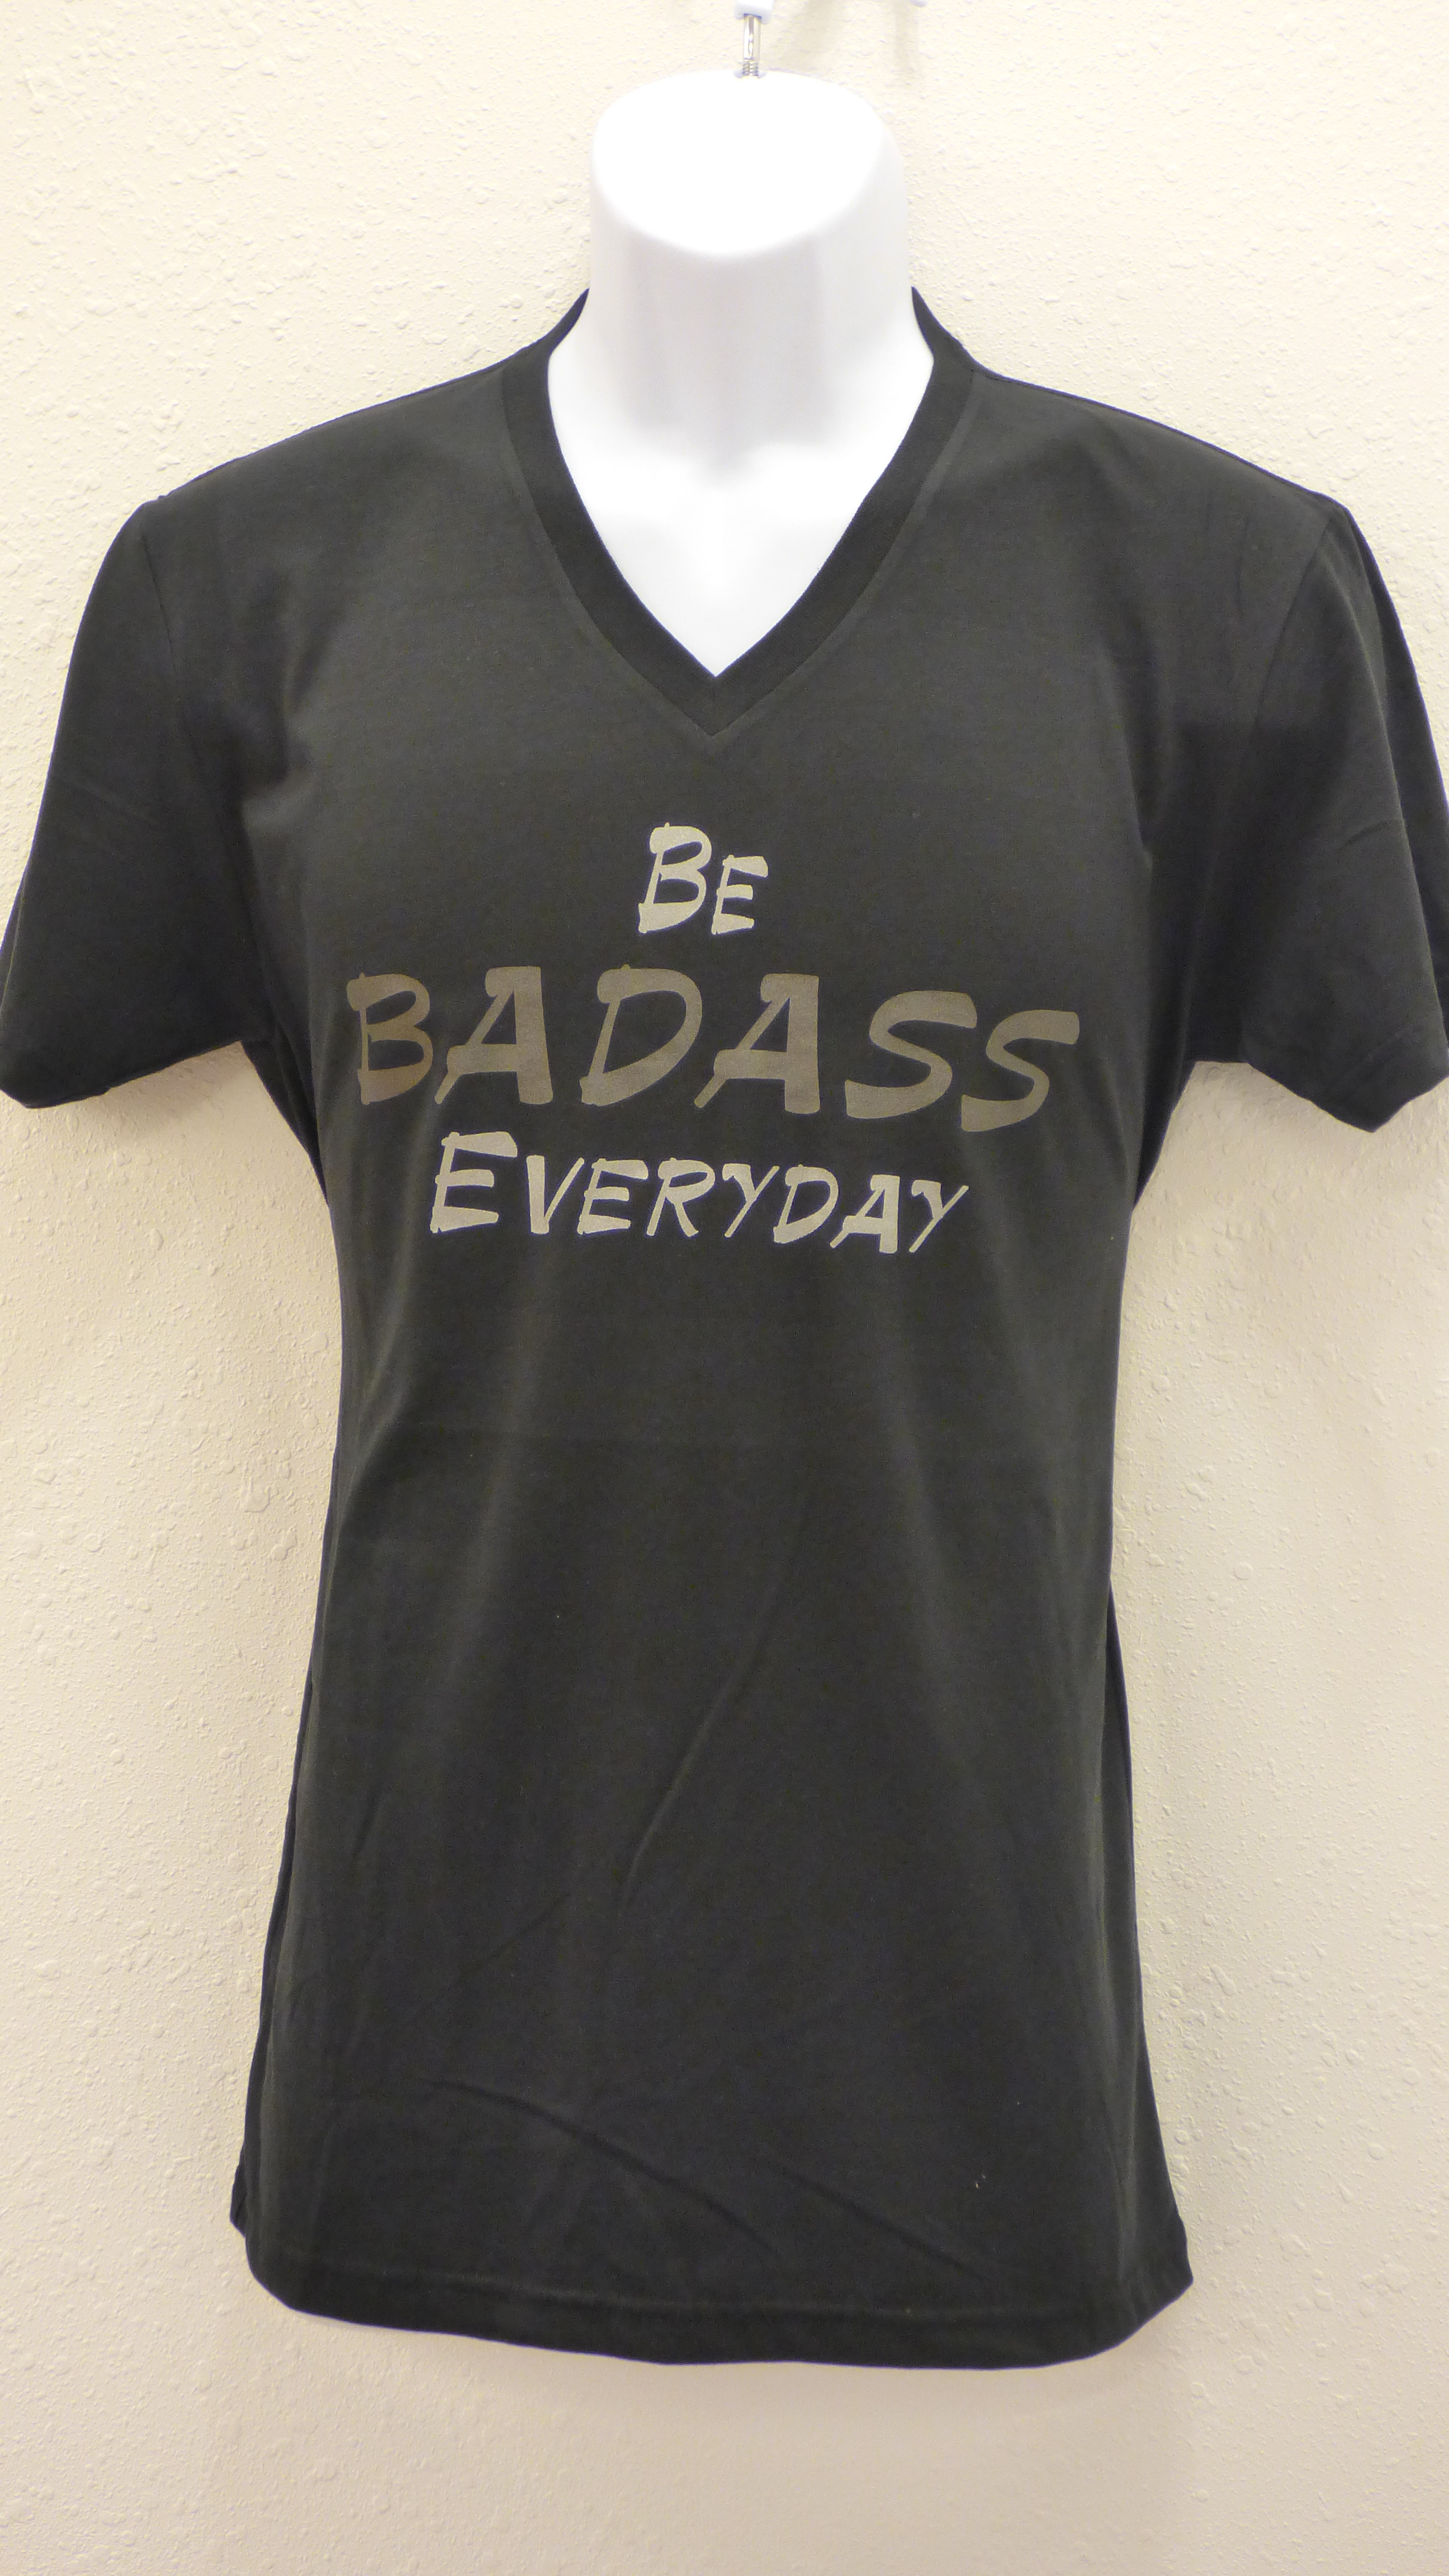 Unisex V-neck 'Be Badass Everyday shirt